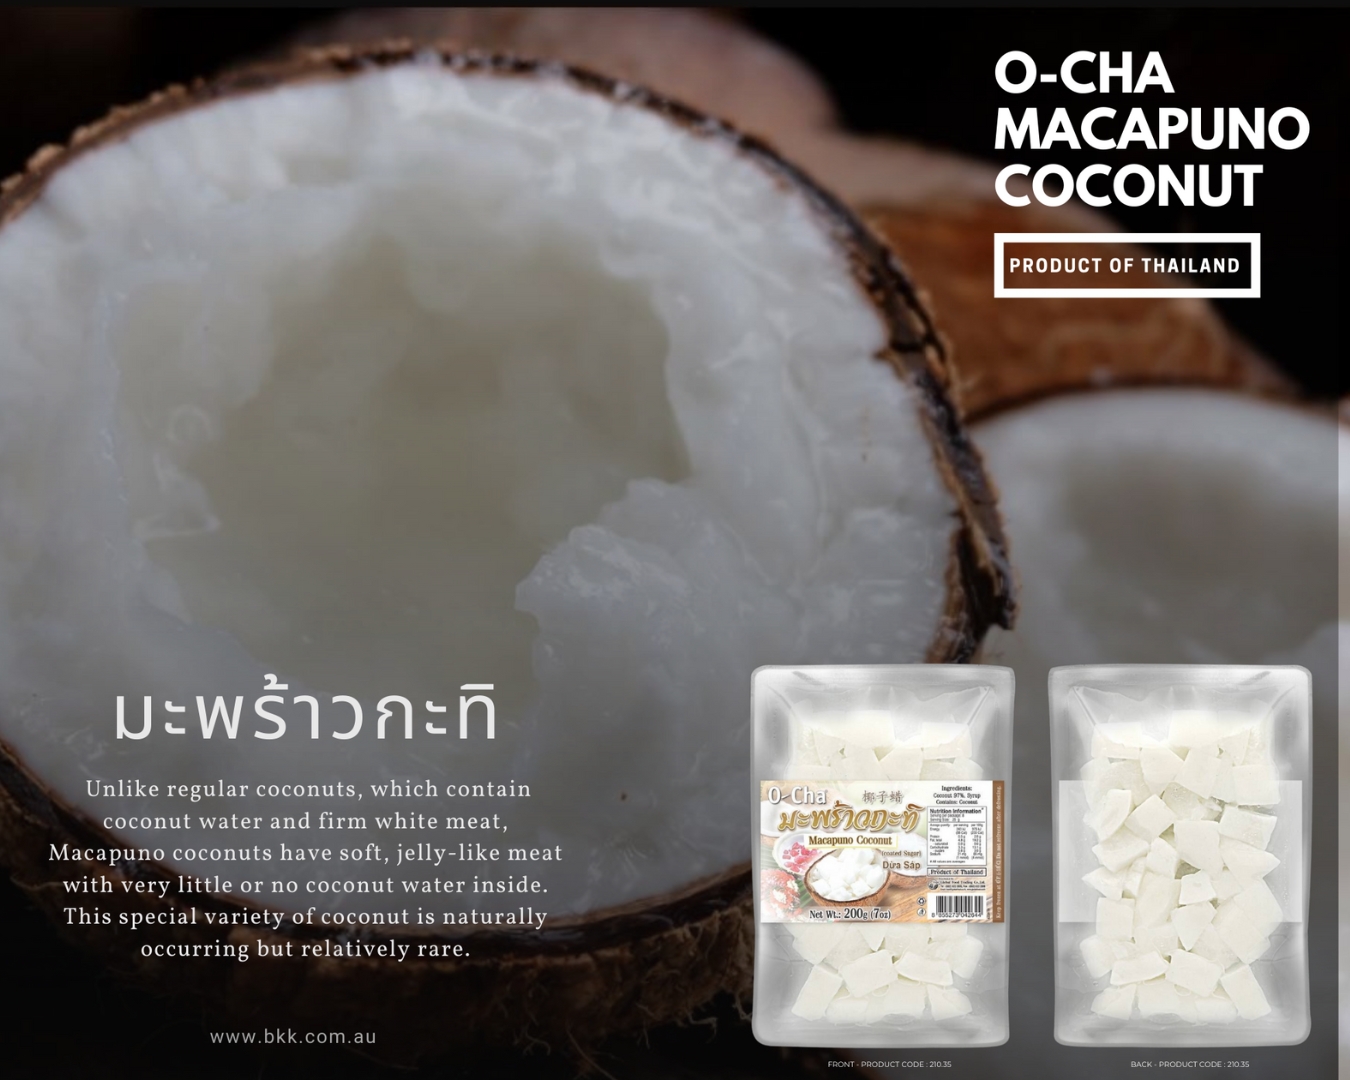 image presents Frozen O-Cha Macapuno Coconut